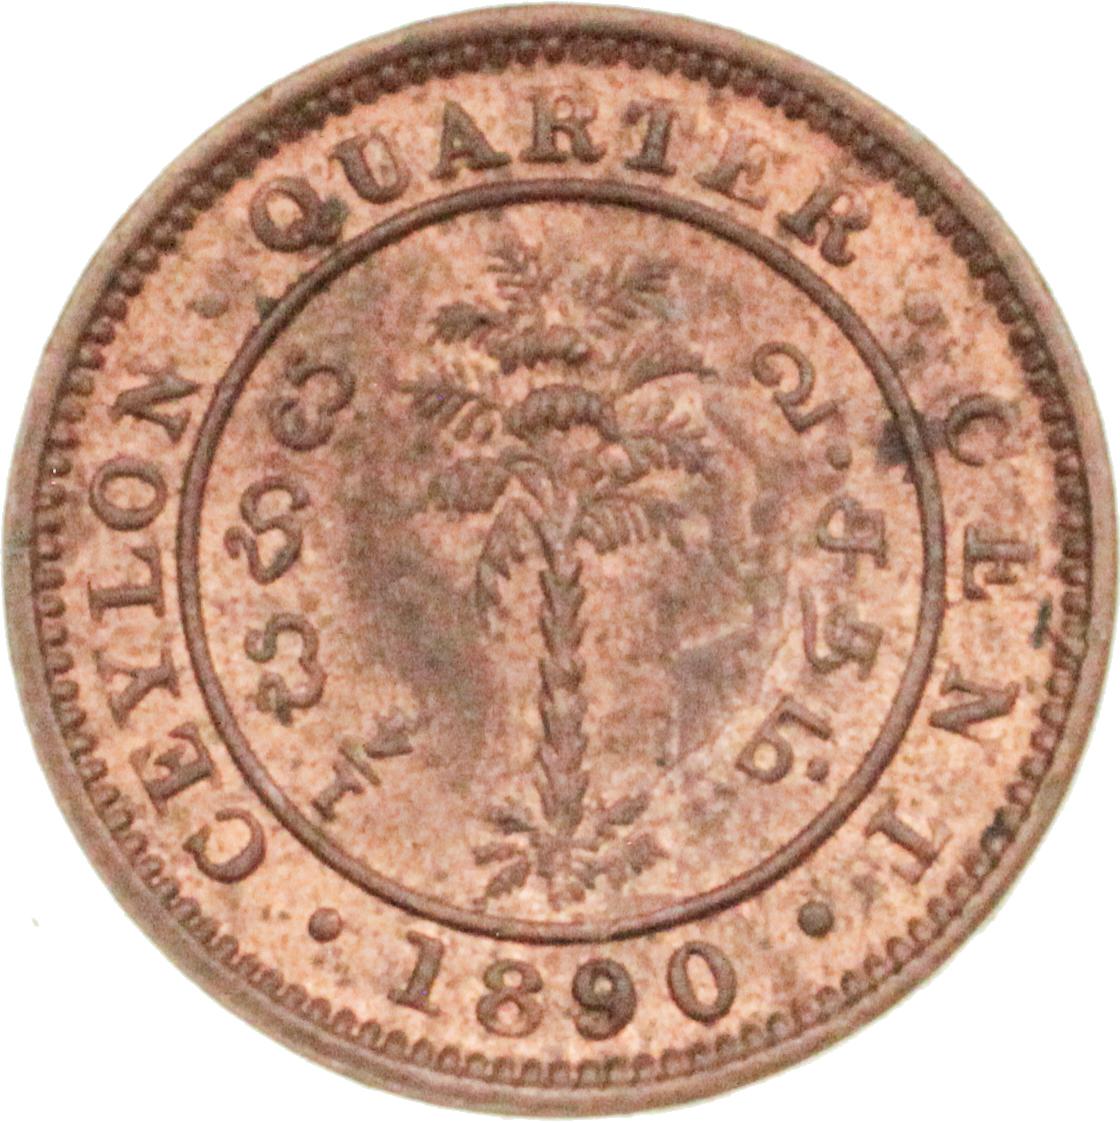 CEYLON, 1/4 cent, 1890